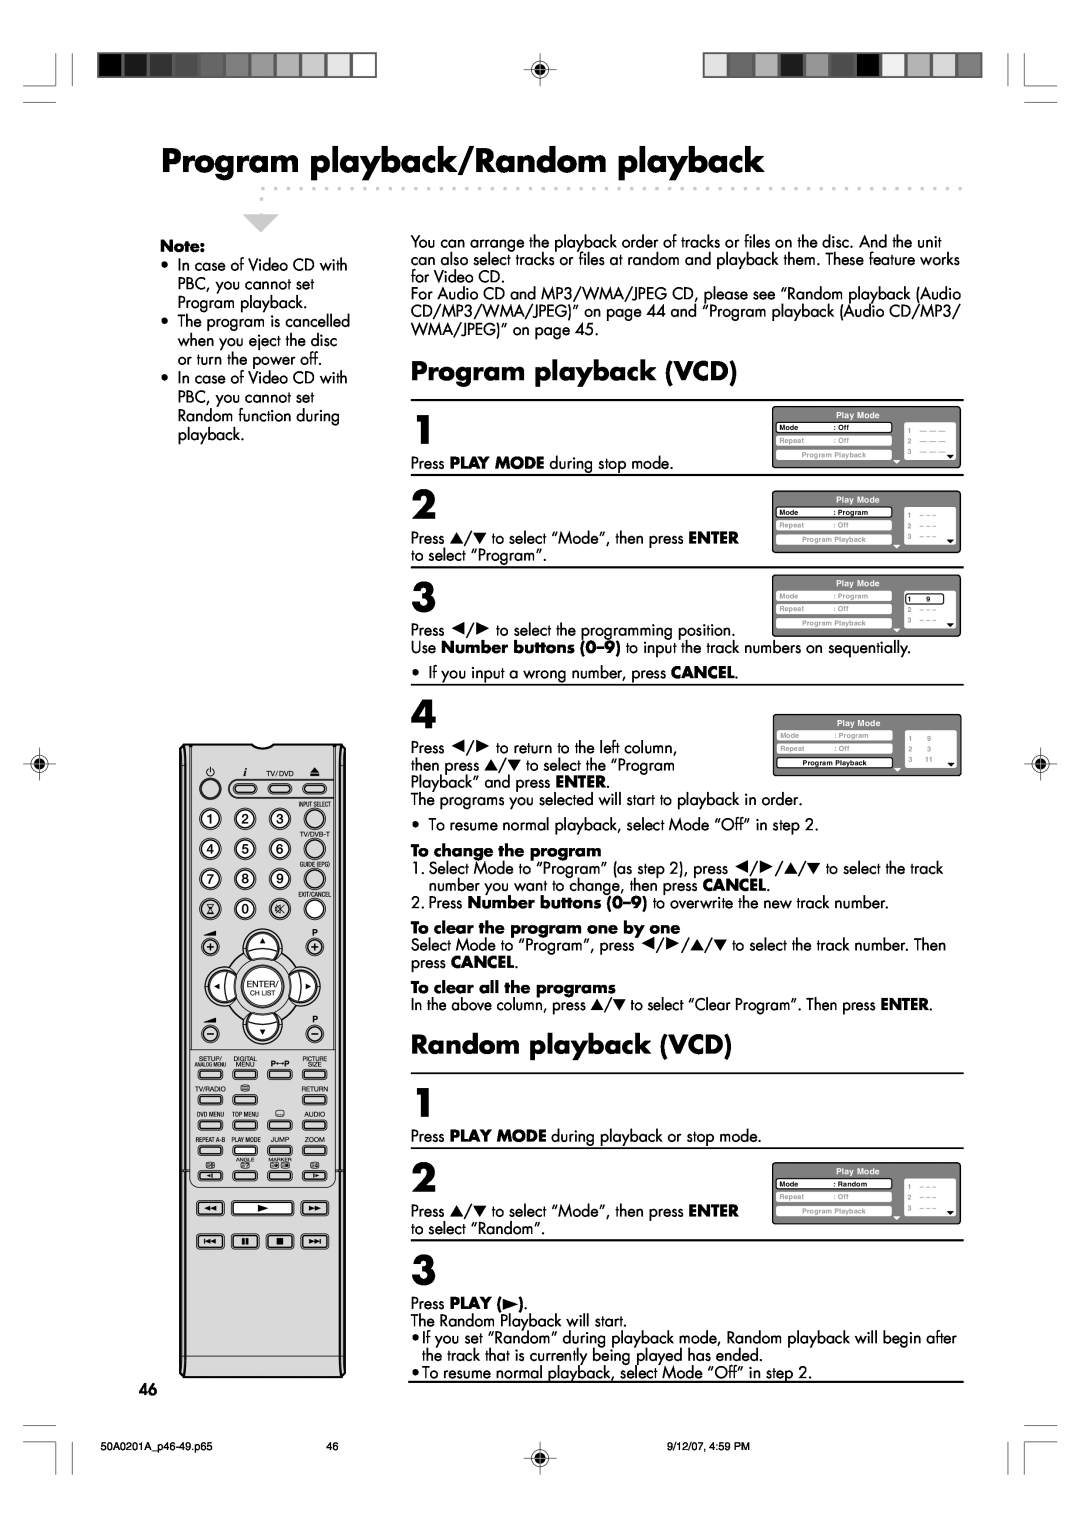 Sansui TV19PL120DVD Program playback/Random playback, Program playback VCD, Random playback VCD, To change the program 